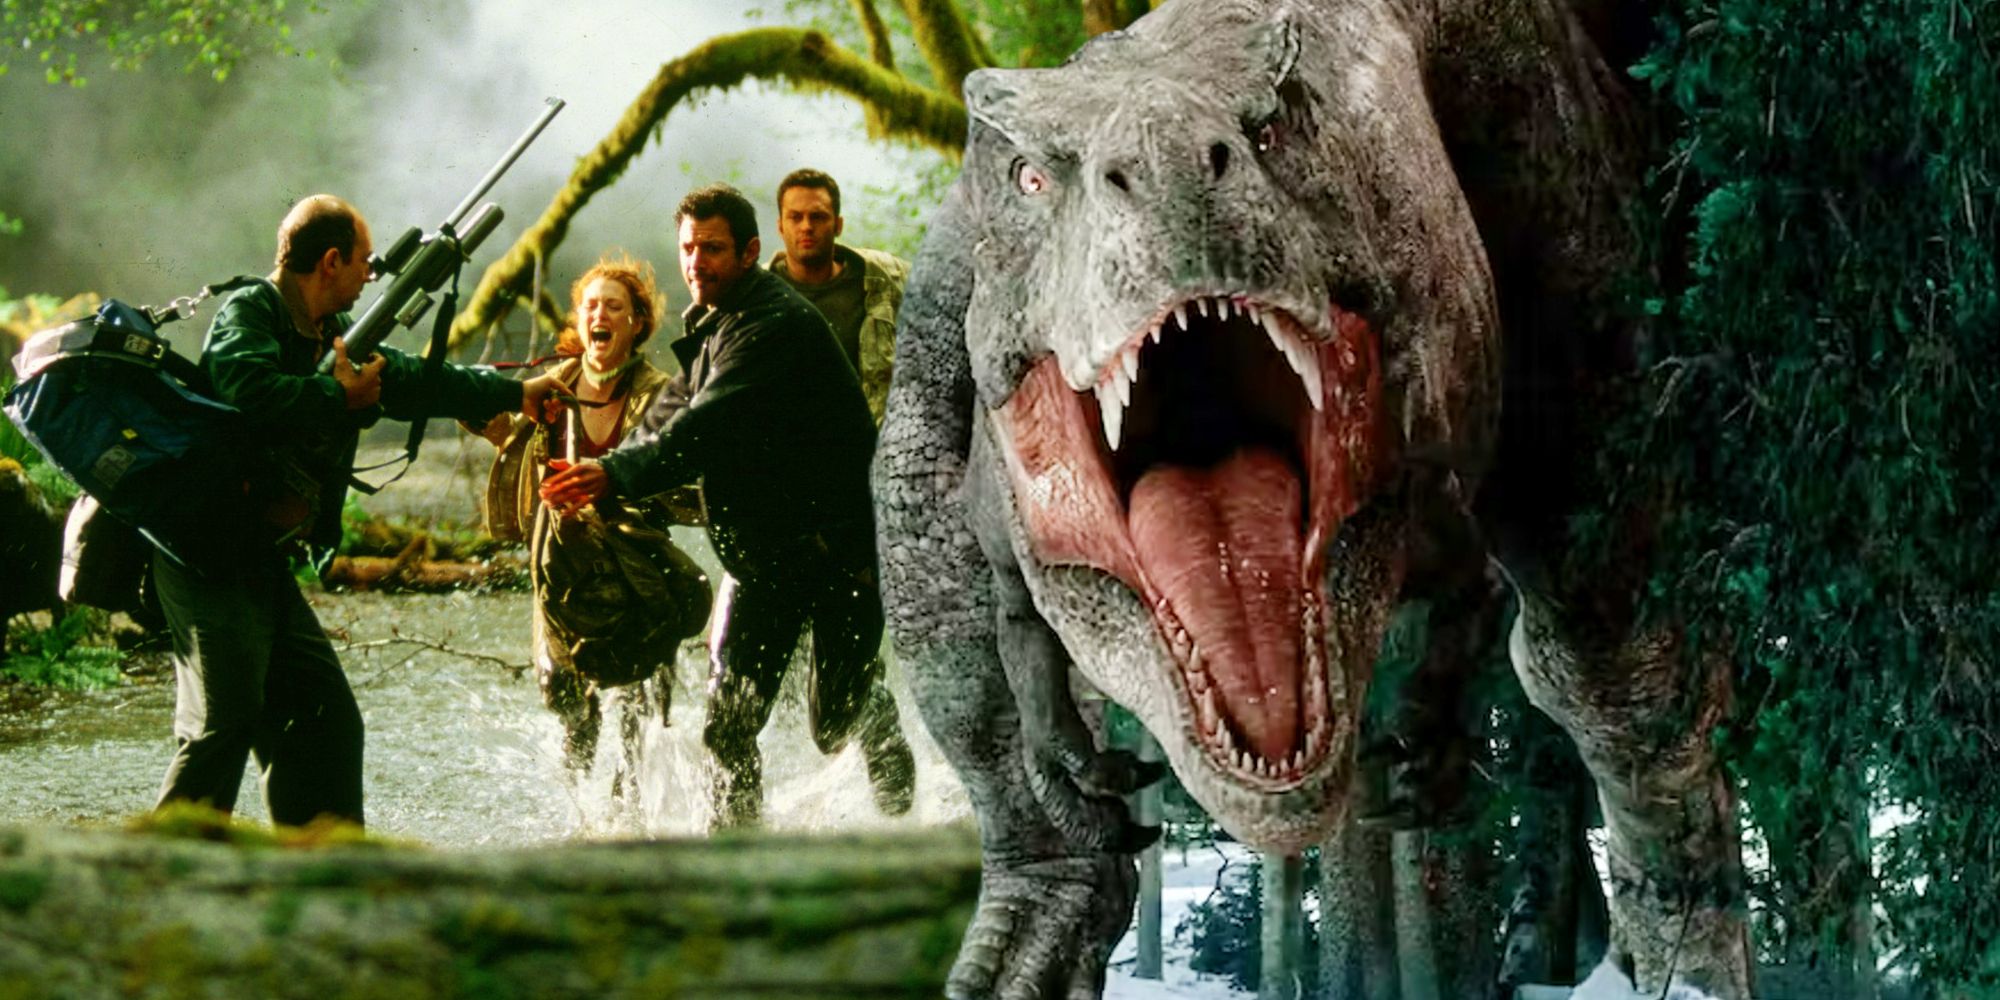 Cast of The Lost World: Jurassic Park next to dinosaur in Jurassic World Dominion